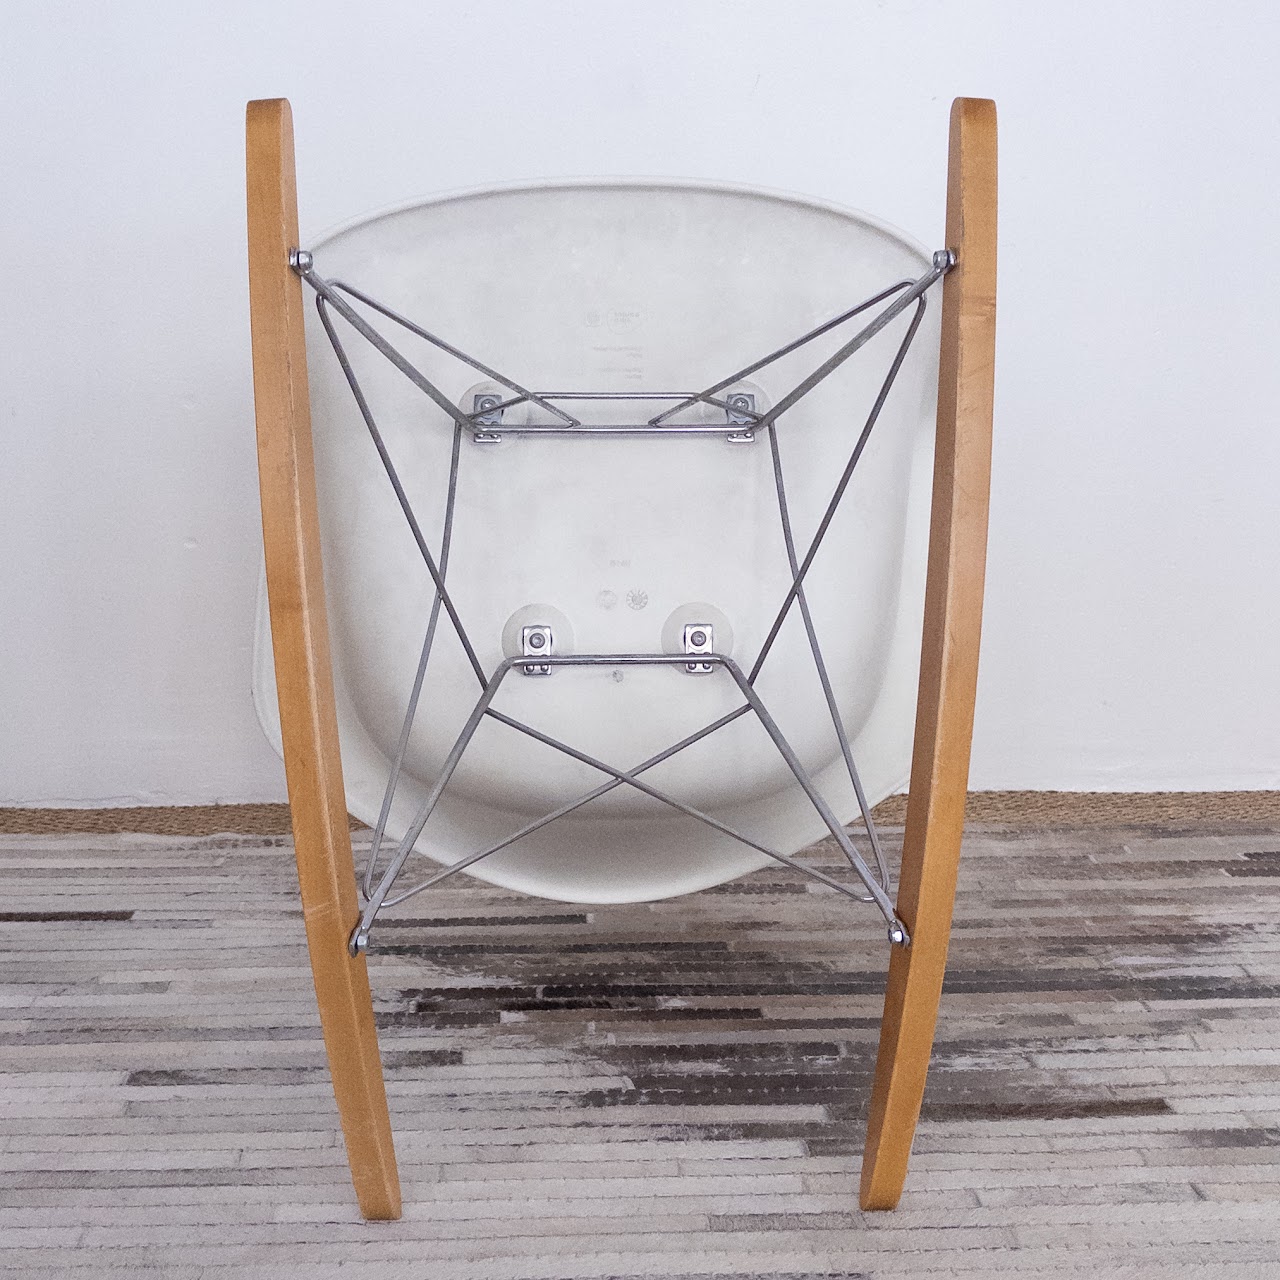 Vitra Eames Molded Plastic Shell Rocking Chair